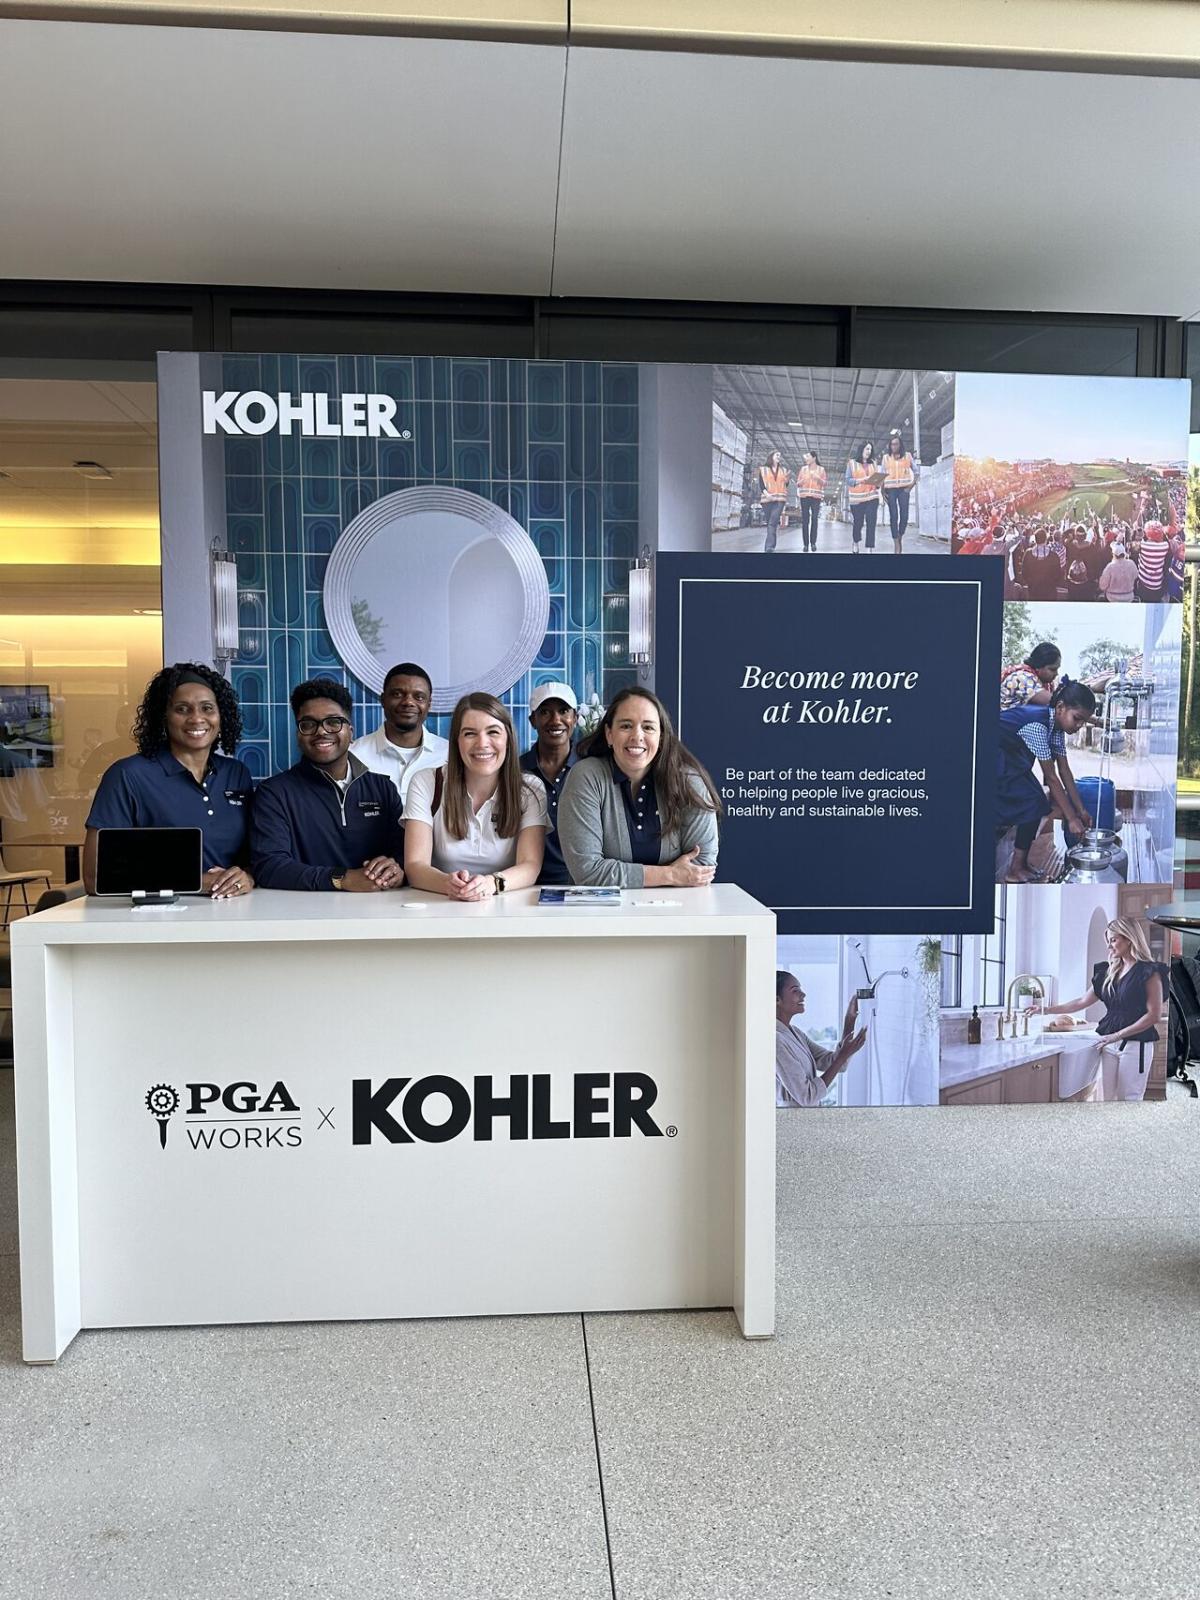 A group posed behind a podium "PGA Works x Kohler" a large display behind them.